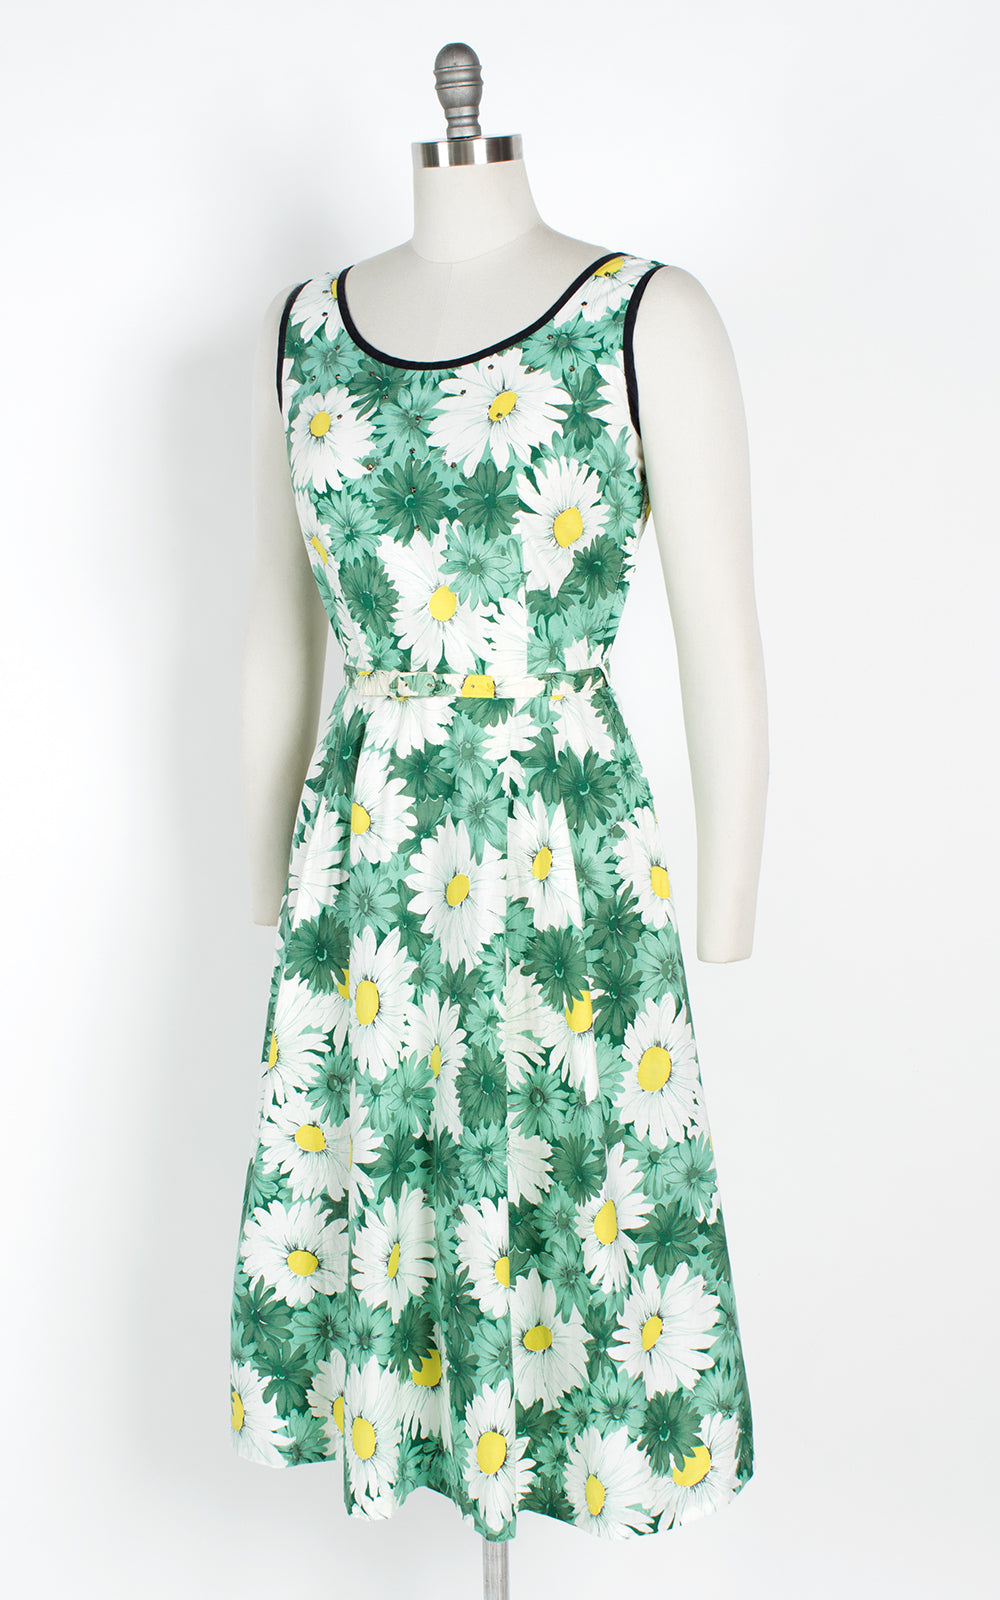 1950s Daisy Printed Cotton Sundress with Rhinestones & Pockets